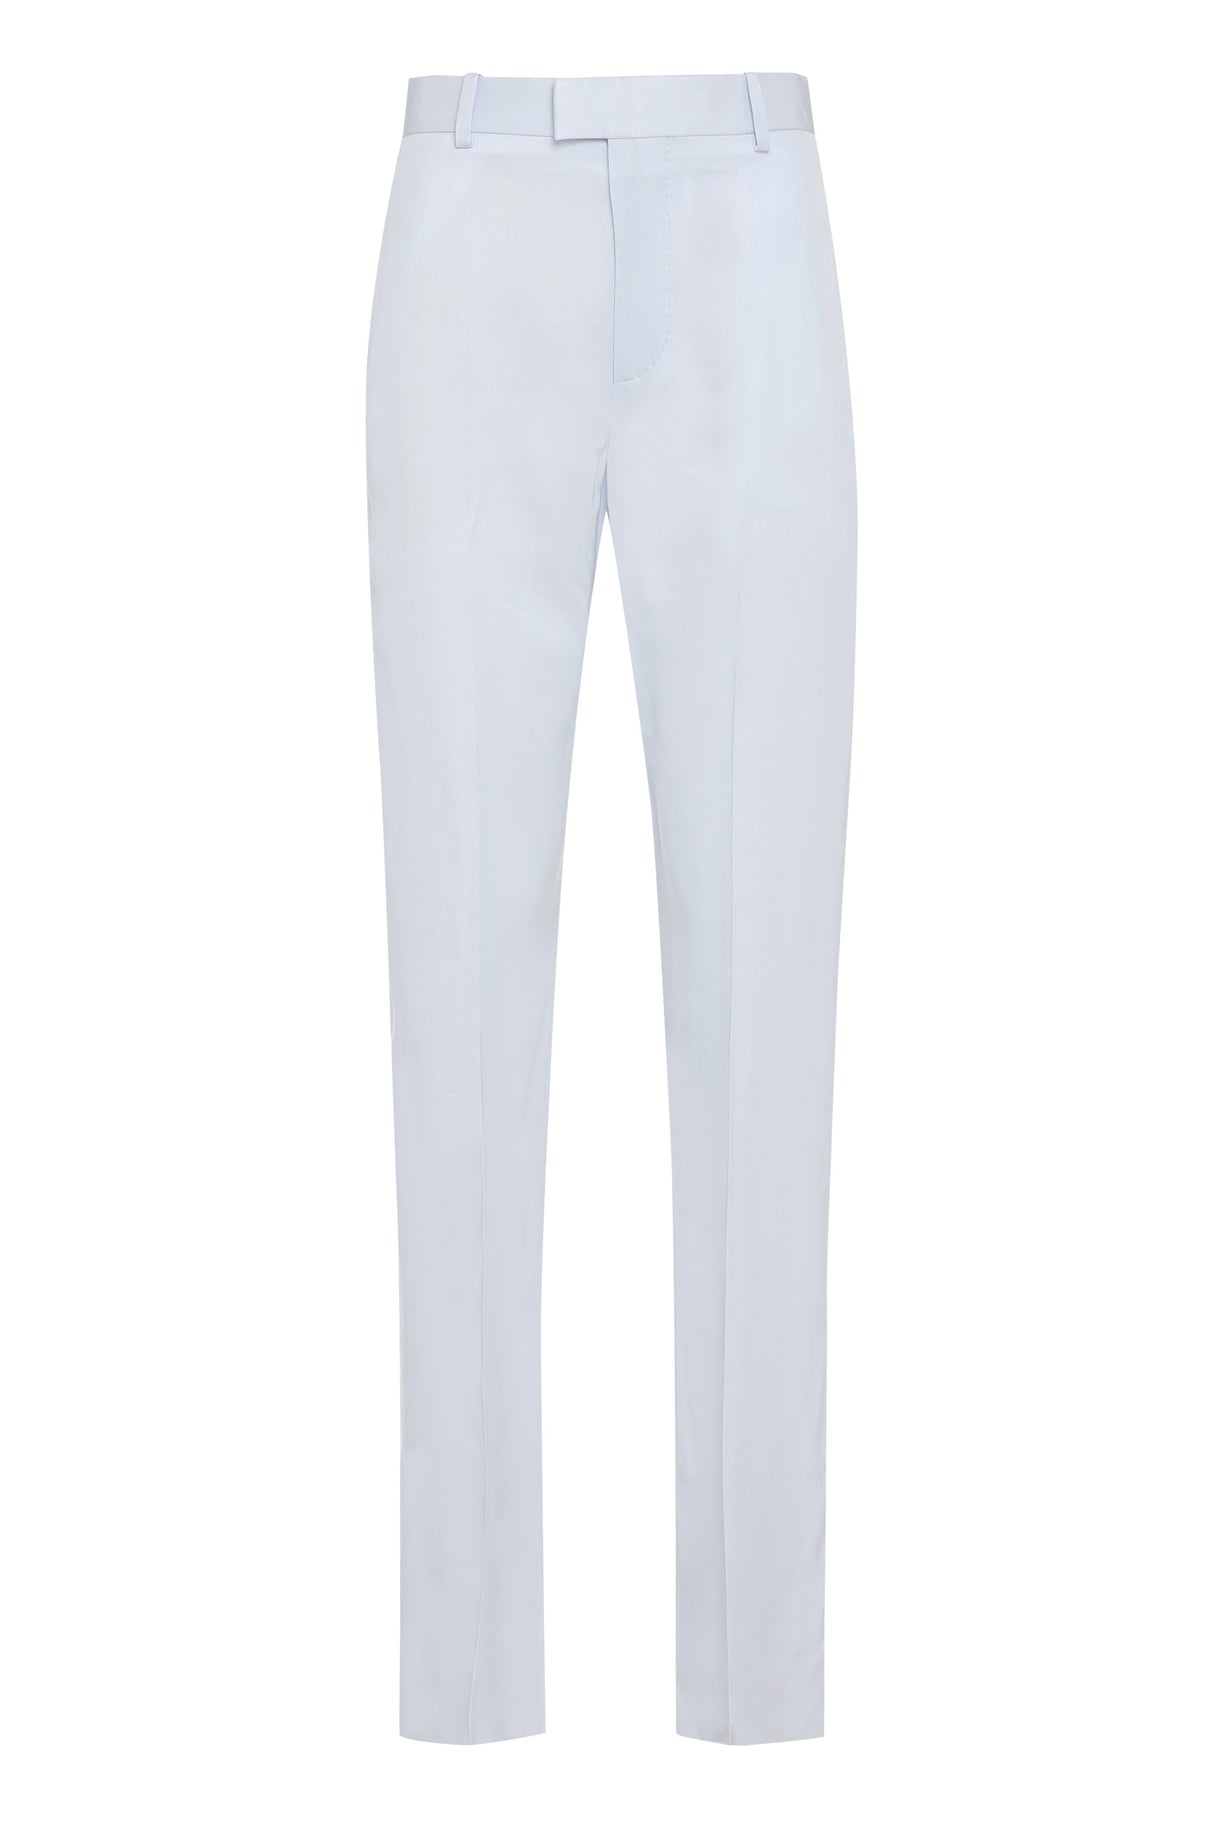 BOTTEGA VENETA Turquoise Straight-Leg Trousers for Women - FW23 Collection